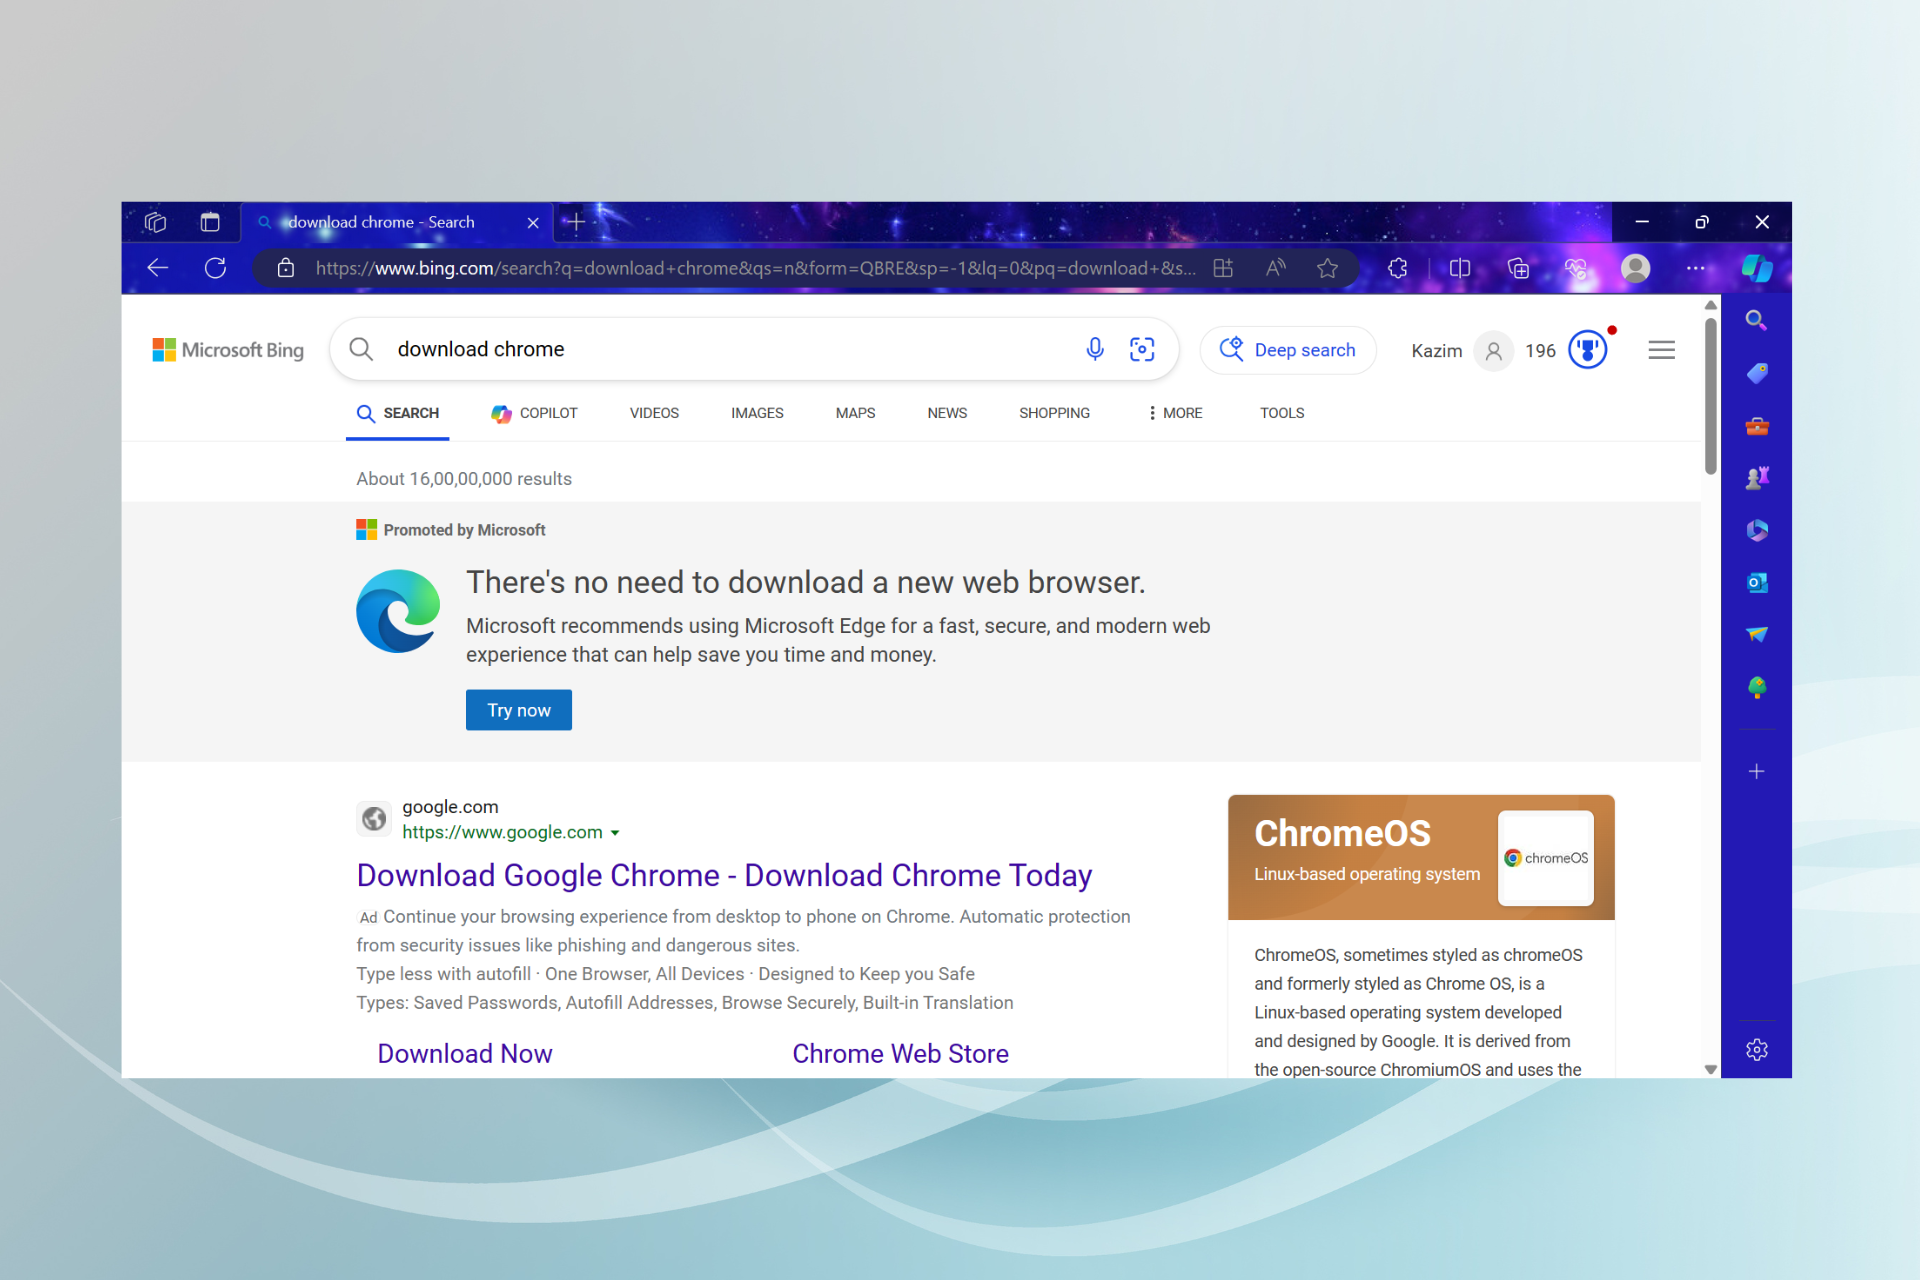 Microsoft’s Bing banner promotes Edge, recommends against downloading Chrome, Tor, or Vivaldi